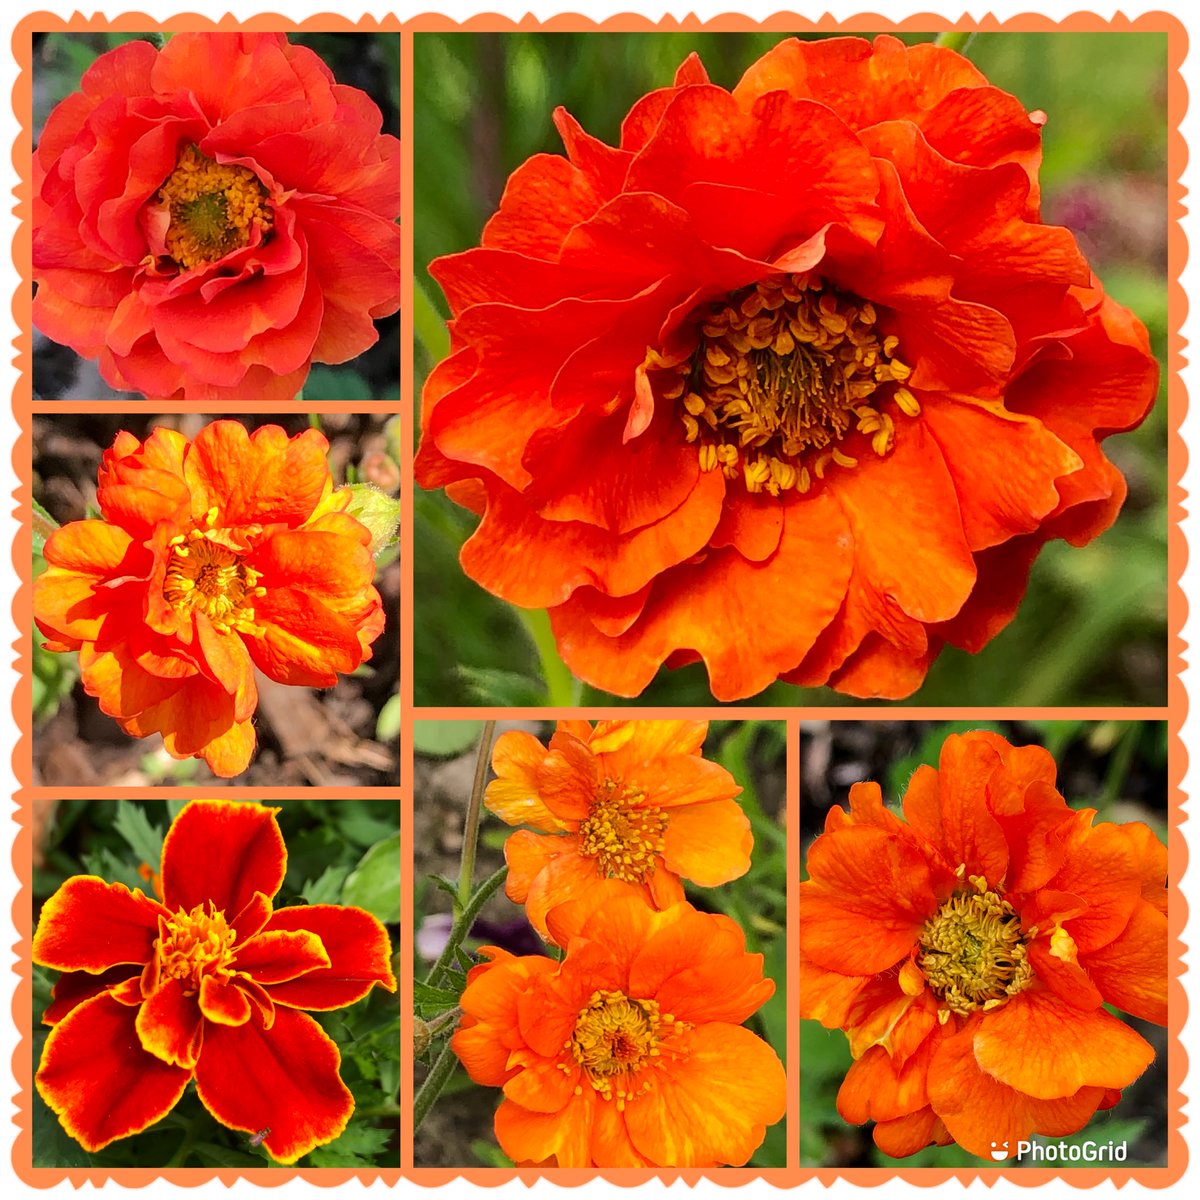 Orange is a winner in the garden right now🧡🧡geums & marigolds #SixOnSaturday #Orange #Geums #Marigolds #Flowers #MyGarden #Colourful #SaturdayVibe